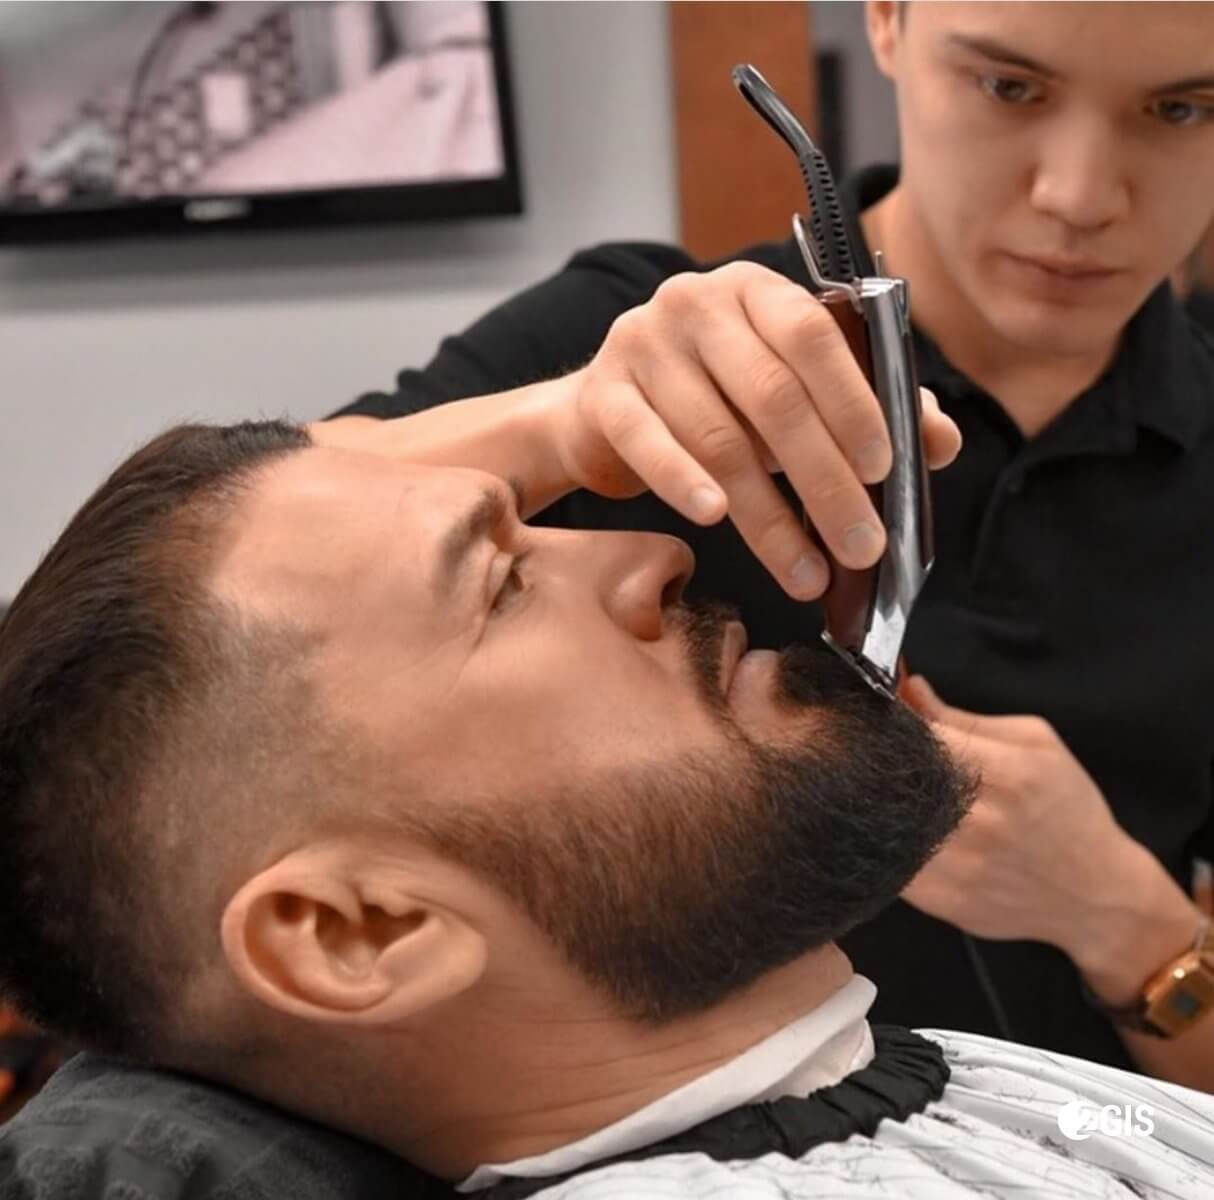 The 5 best barber shops in Phoenix